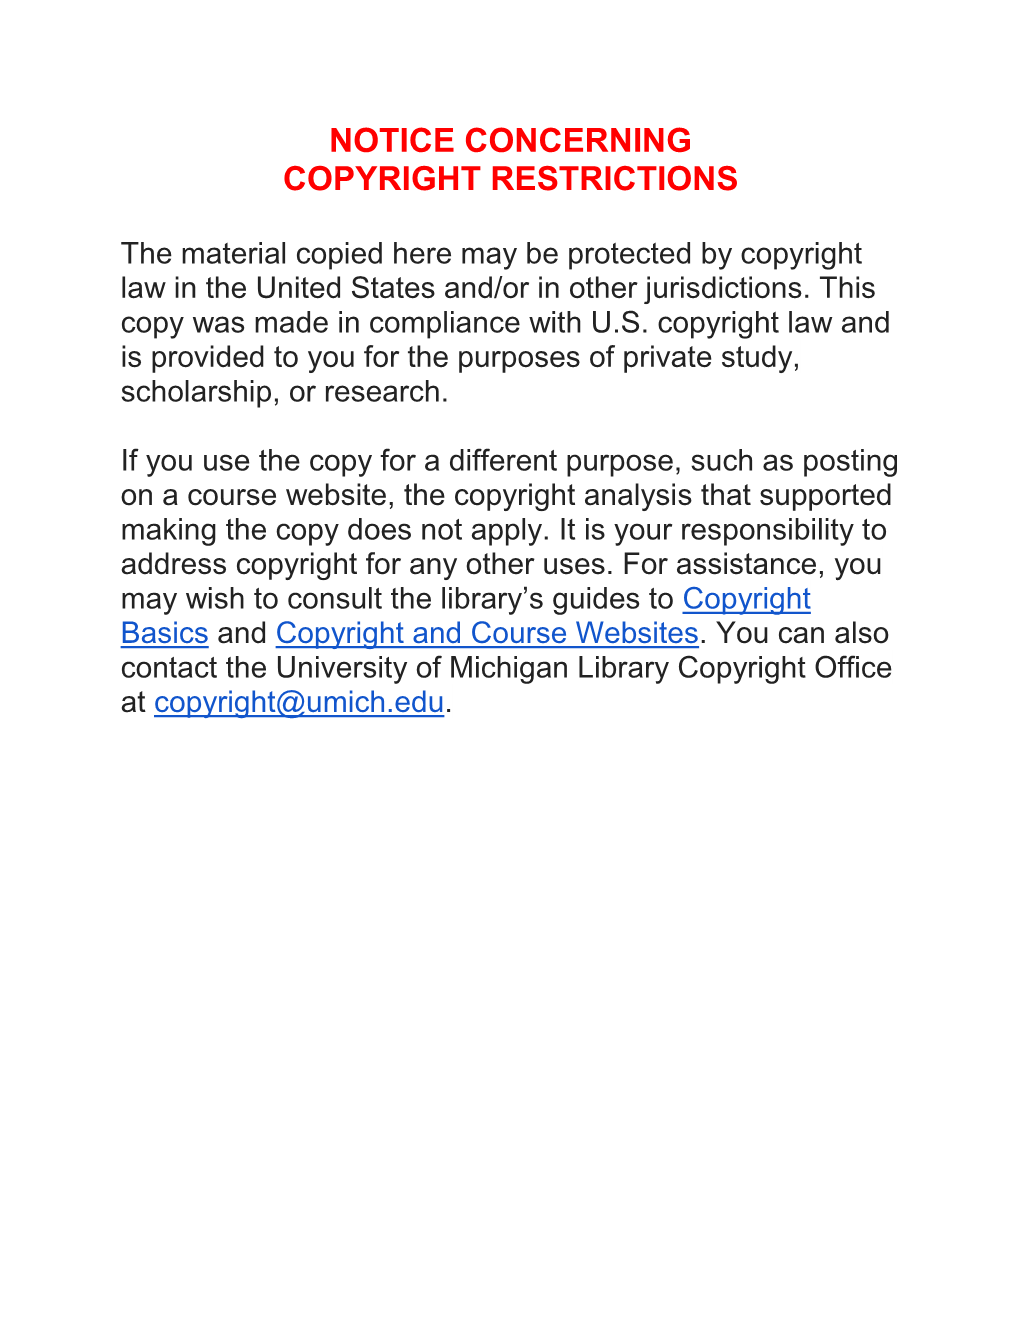 Notice Concerning Copyright Restrictions